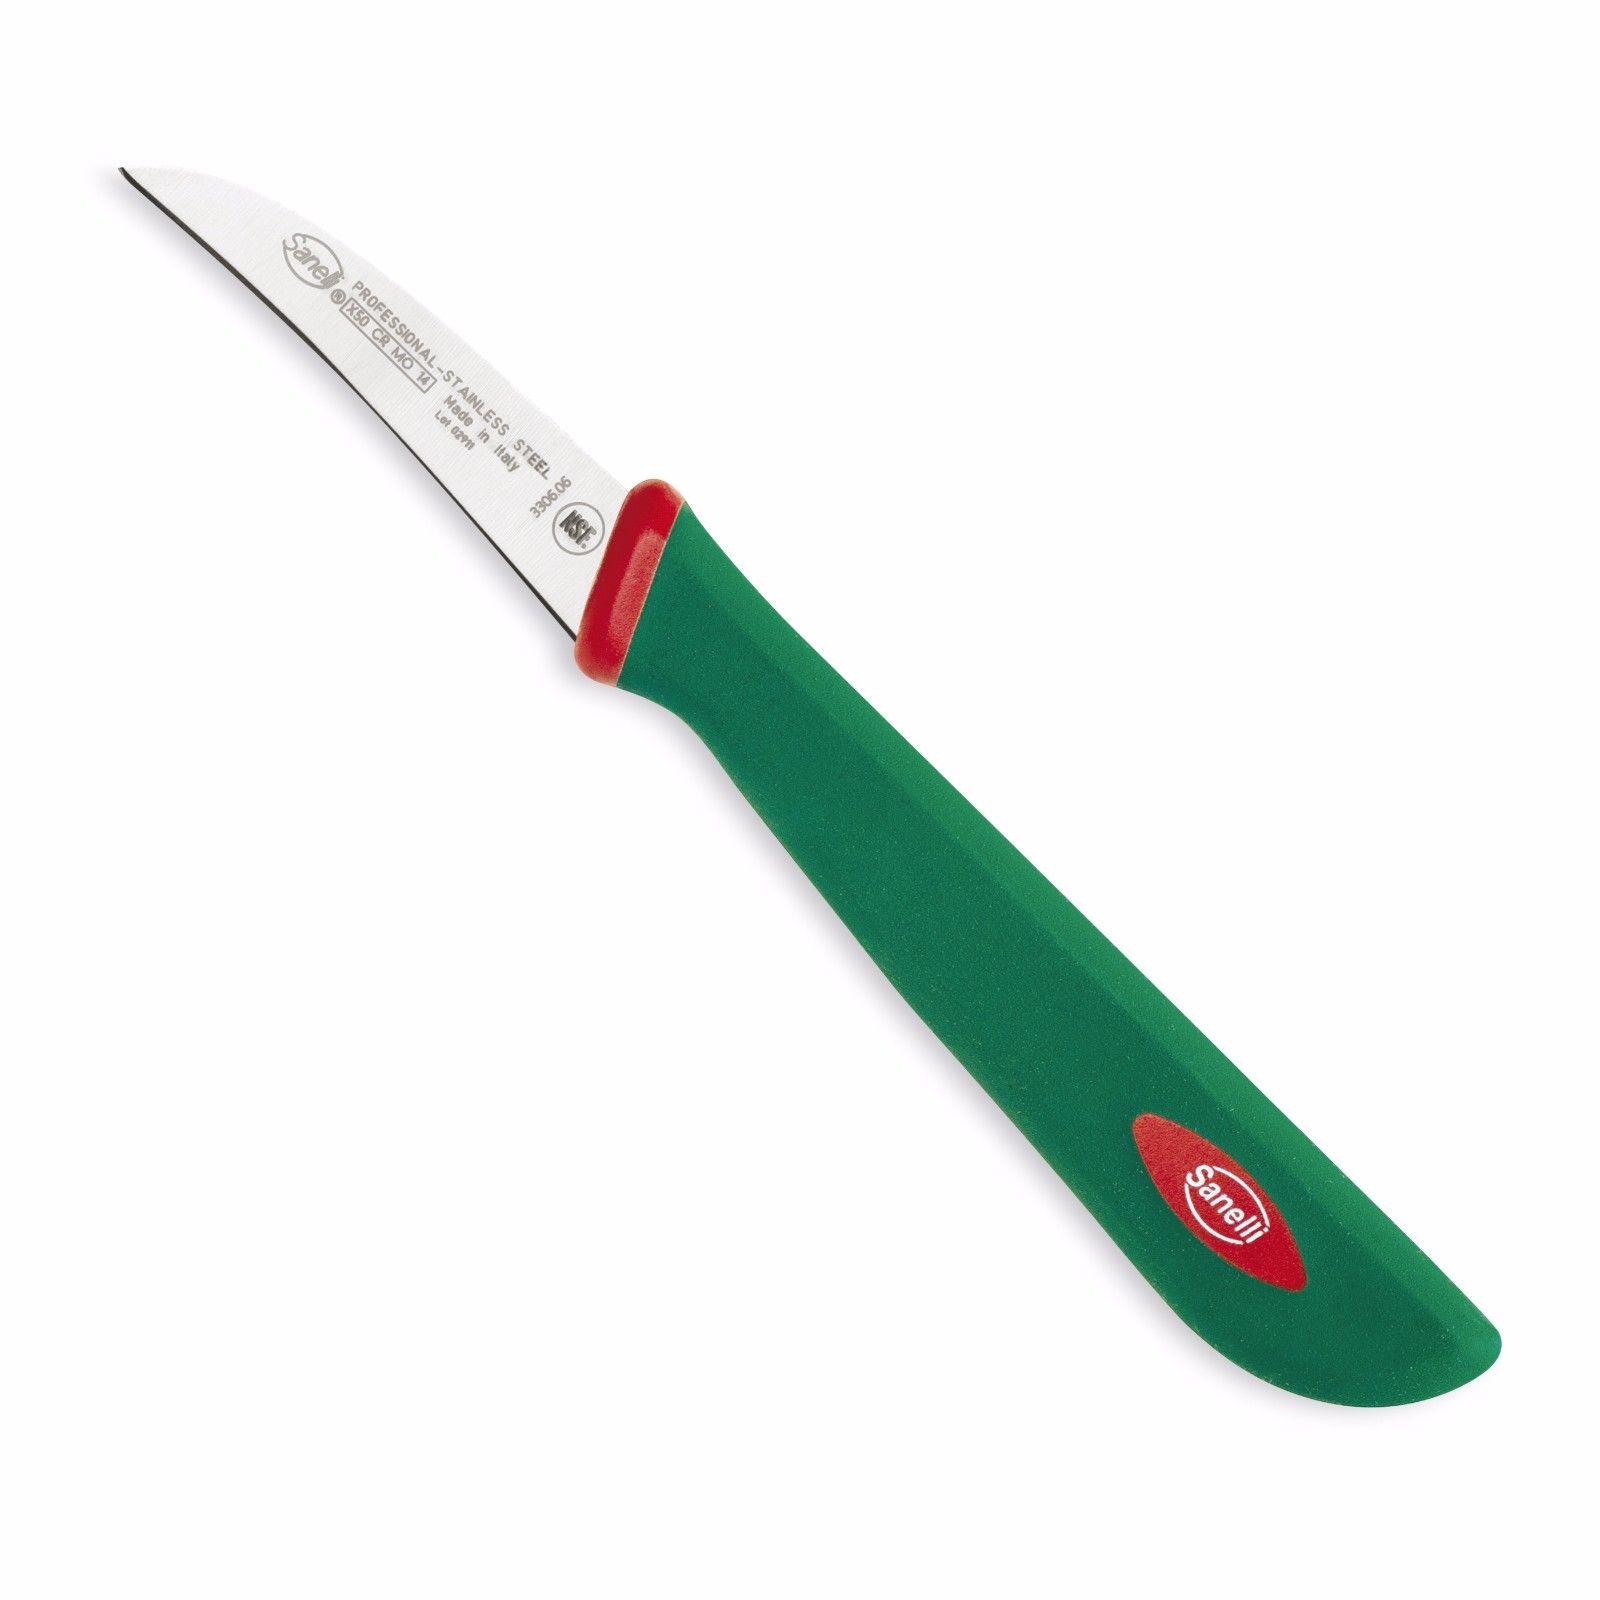 Coltellerie Sanelli coltello verdura cm 6 Premana Professional